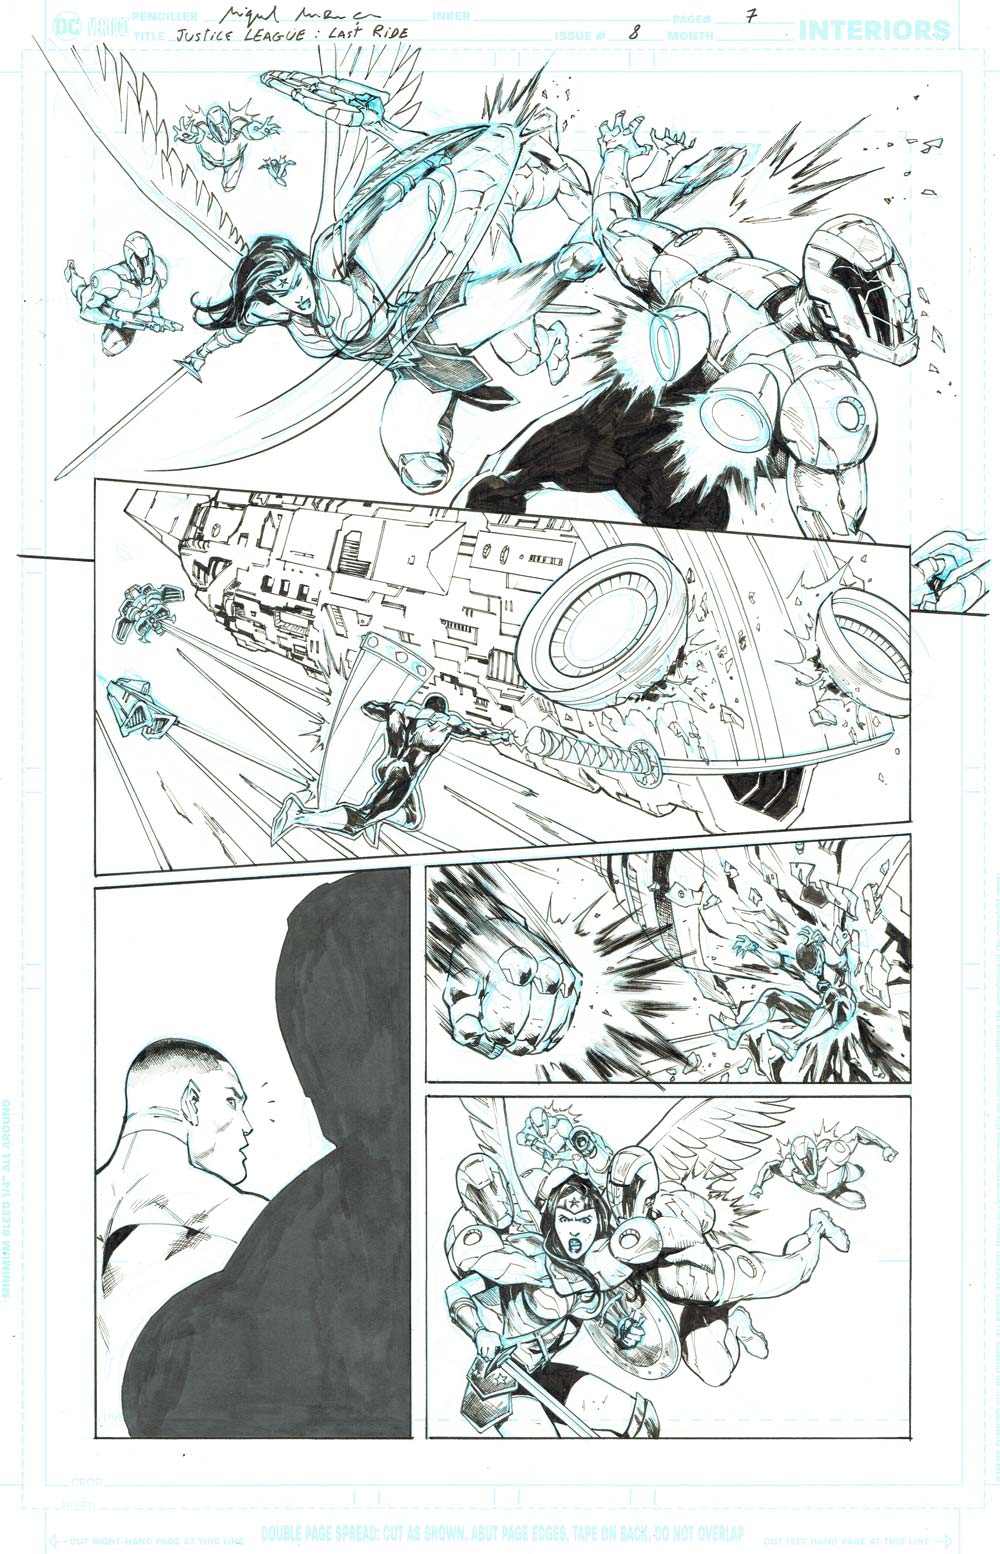 Justice League - Last Ride #4 (Page 17)